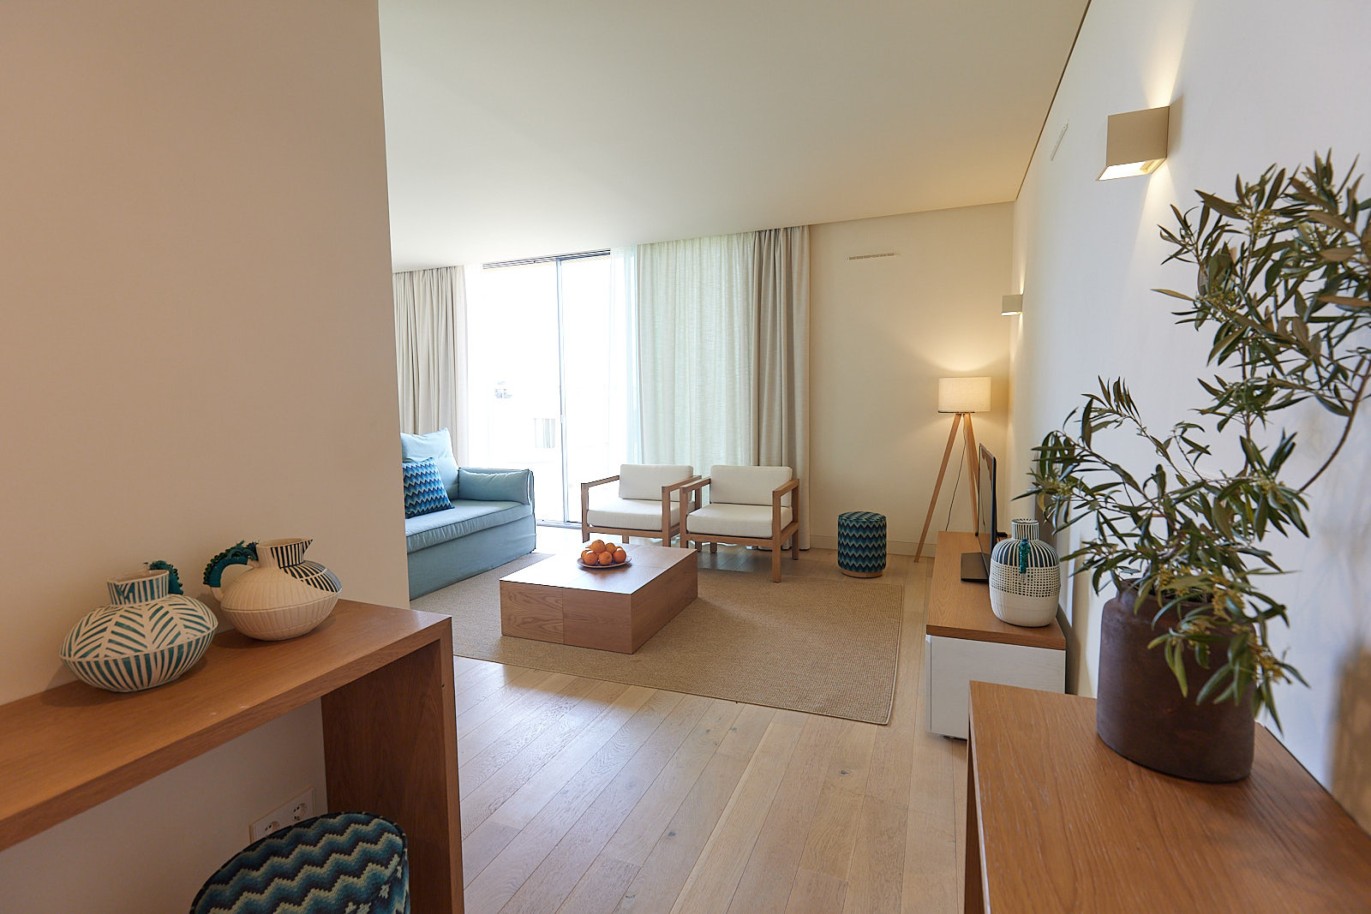 2 bedroom apartment in resort, for sale in Porches, Algarve_229214